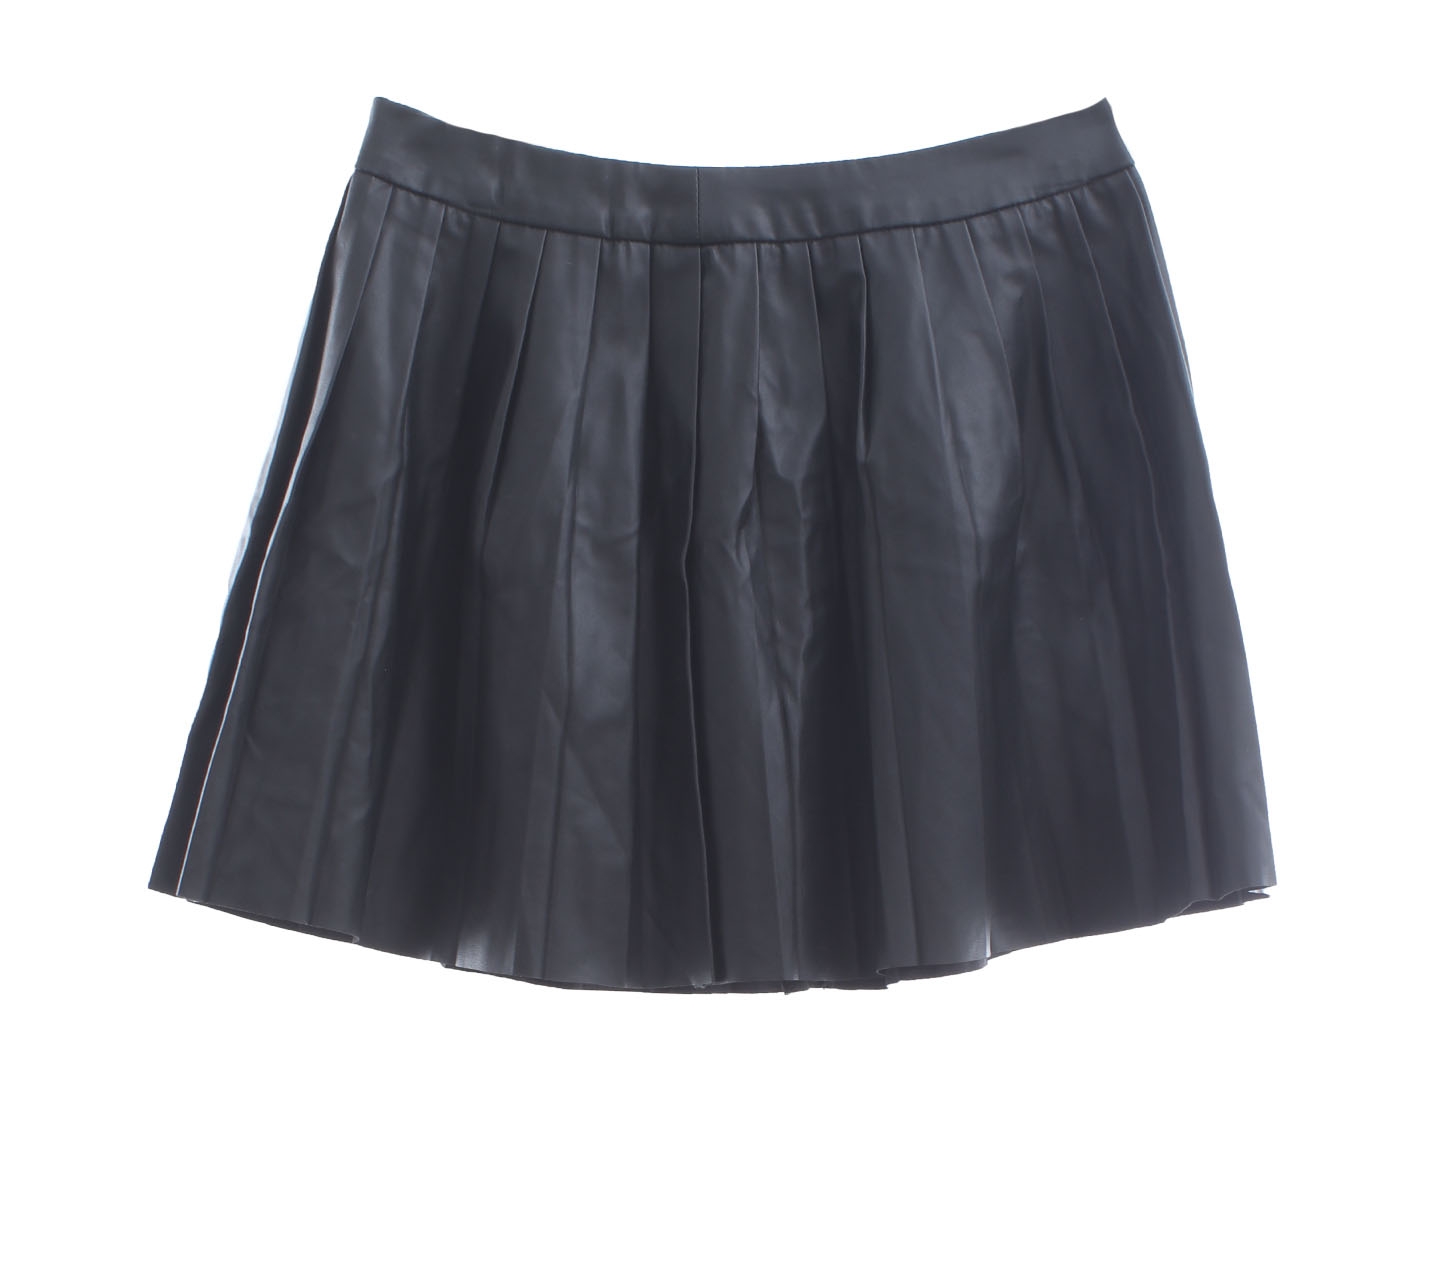 Kendall + Kylie Black Rimple Faux Leather Mini Skirt